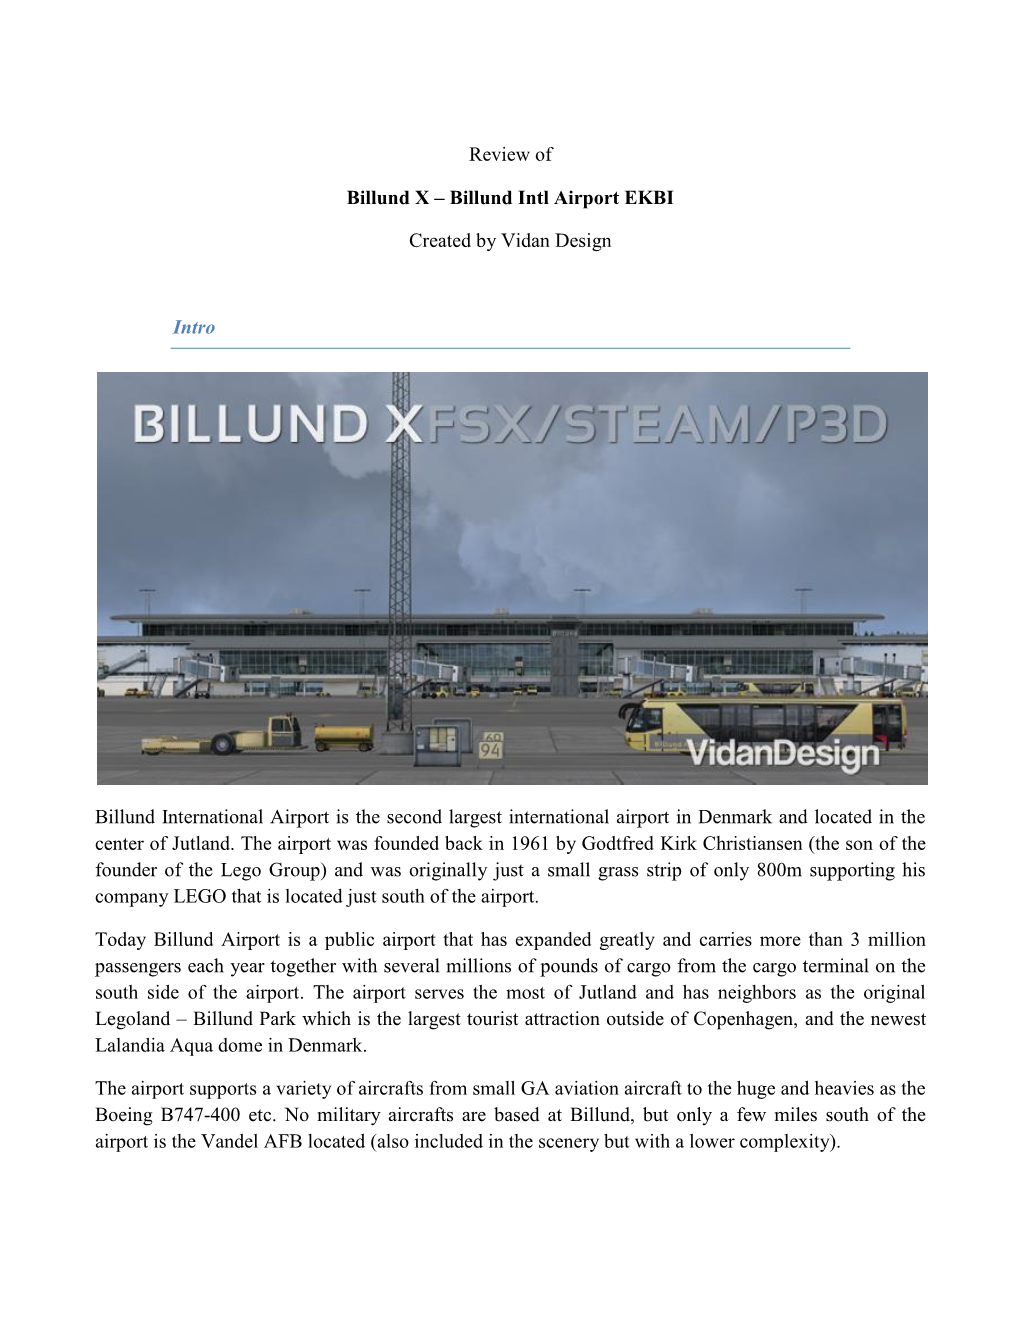 Review of Billund X – Billund Intl Airport EKBI Created by Vidan